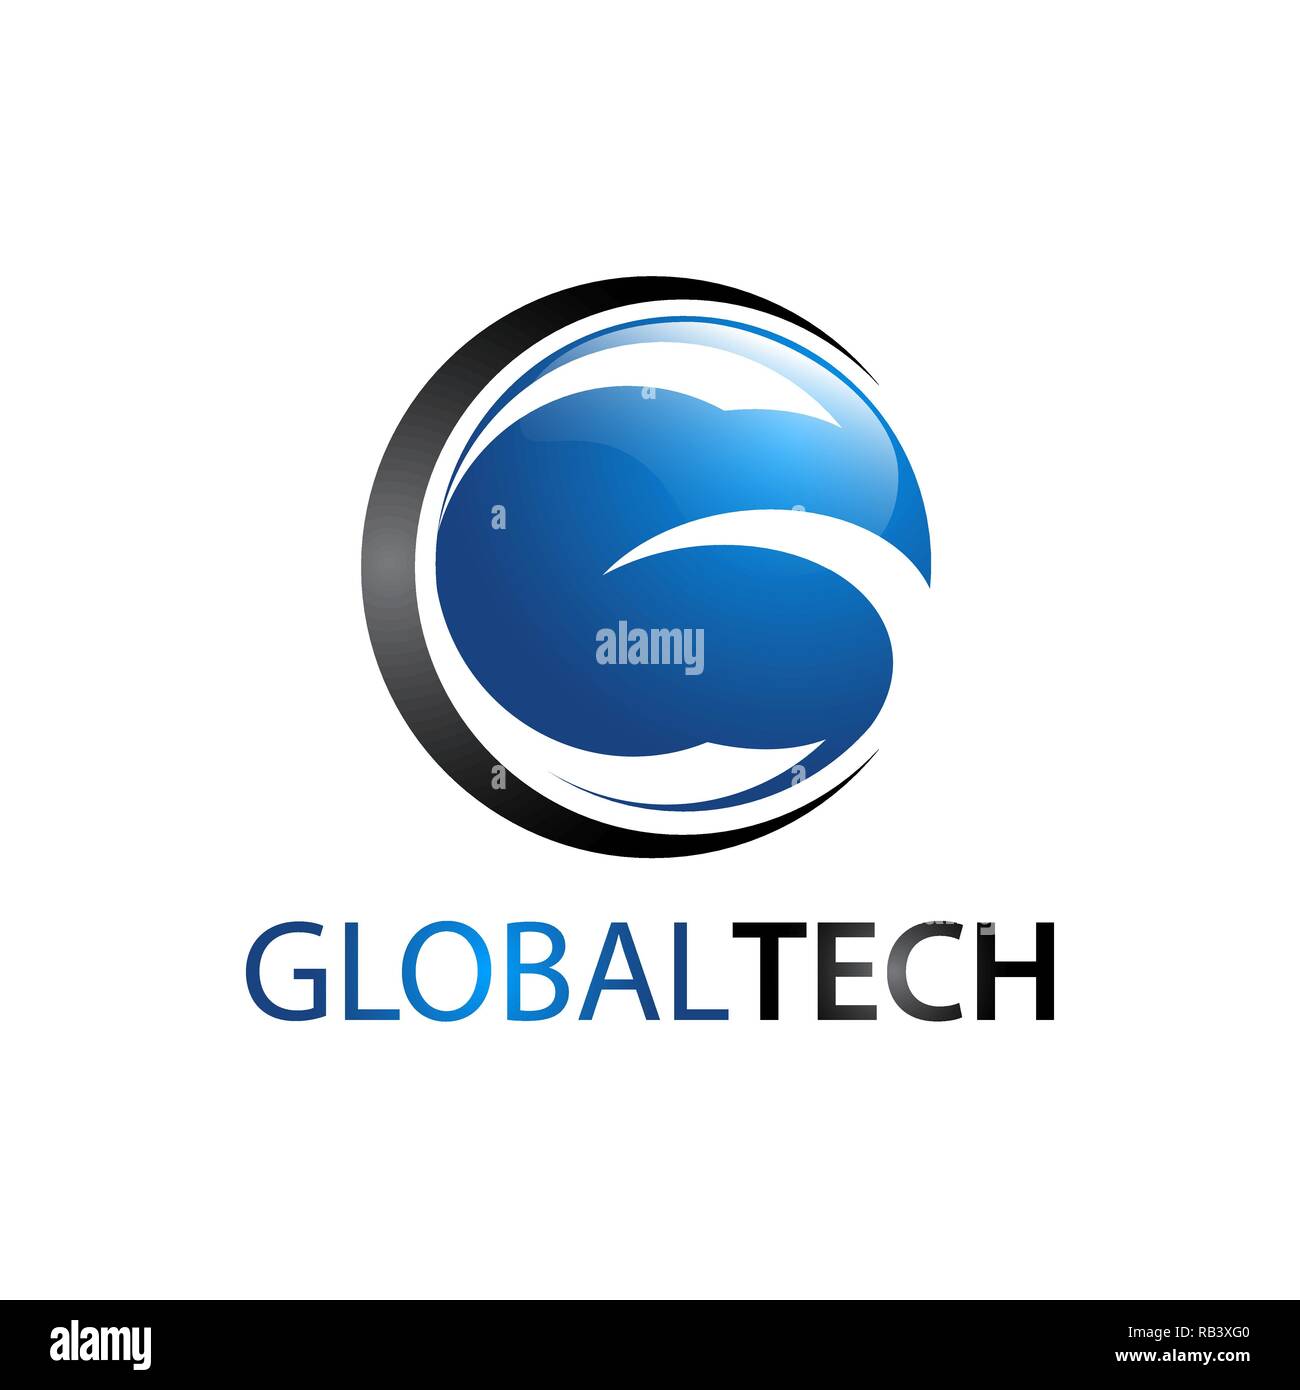 Global Tech Kreis schreiben G logo Konzept Design Idee Stock Vektor